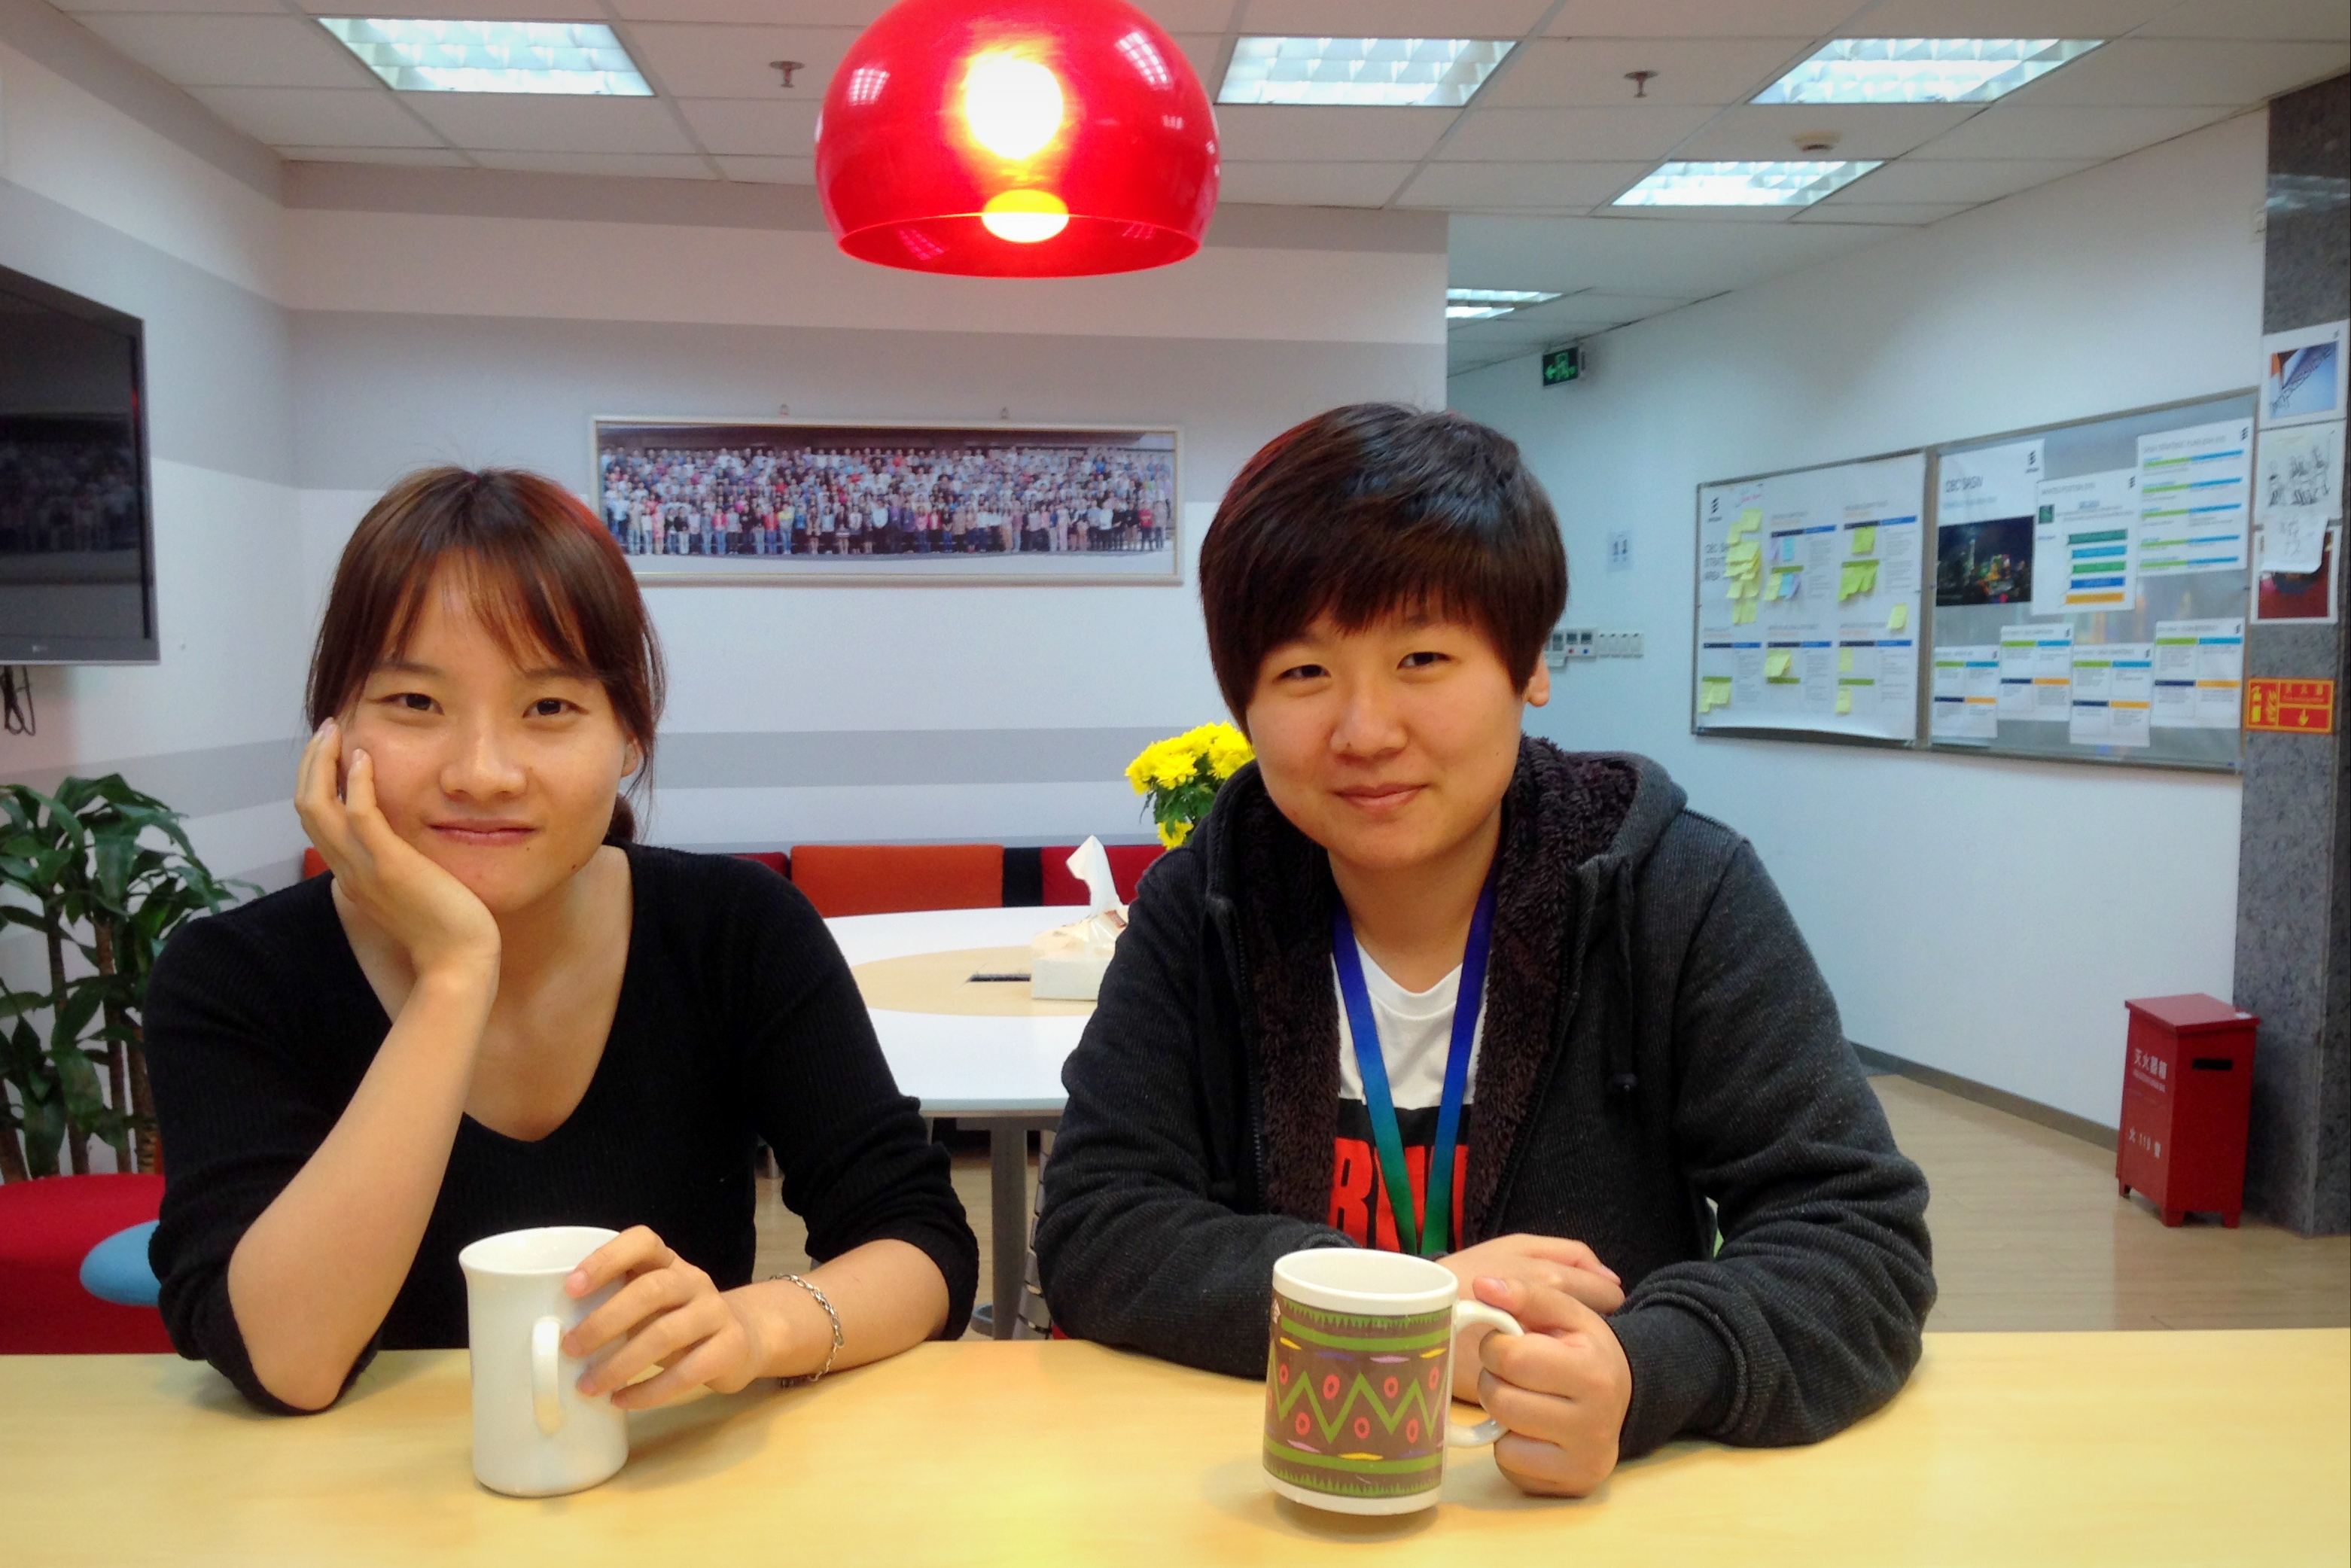 Technical writers Tina Yuan and Hazzy HeHa